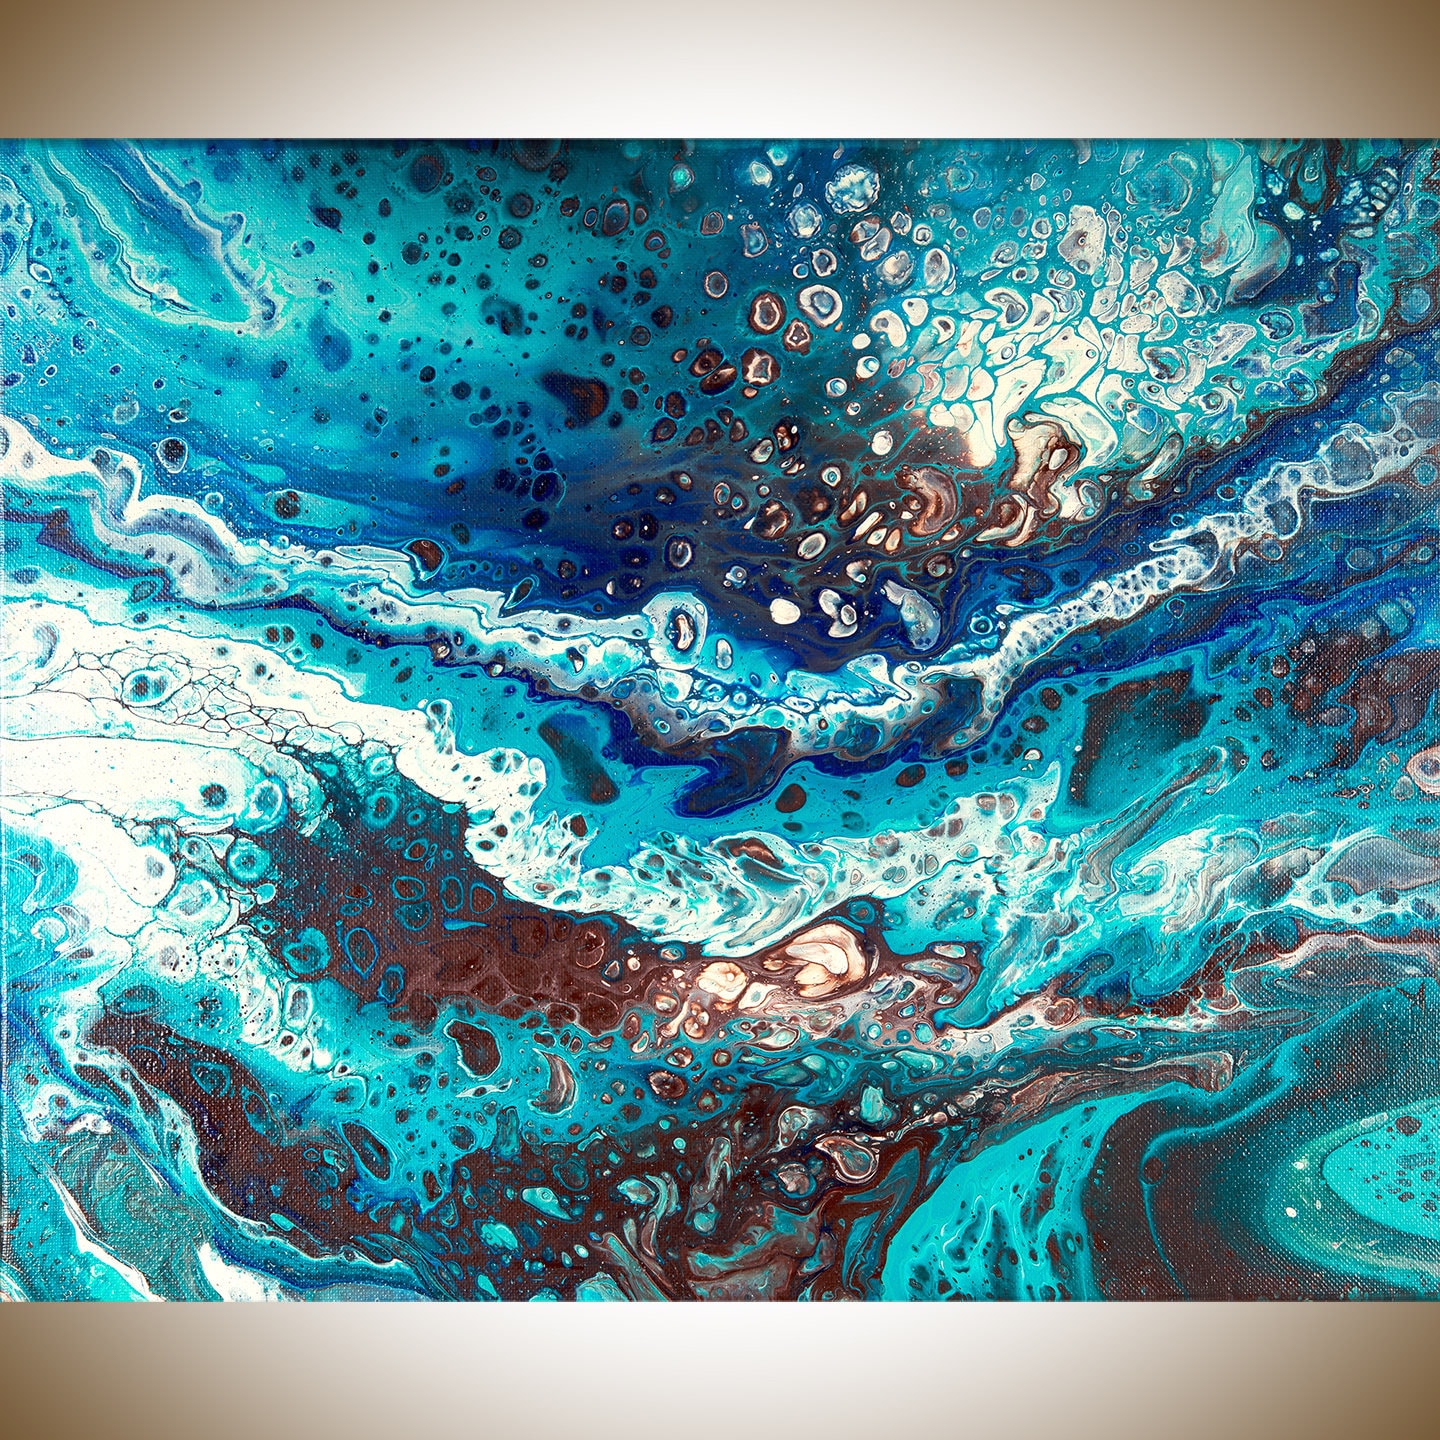 Acrylic pour fluid  art  fluid  painting Blue  turquoise teal